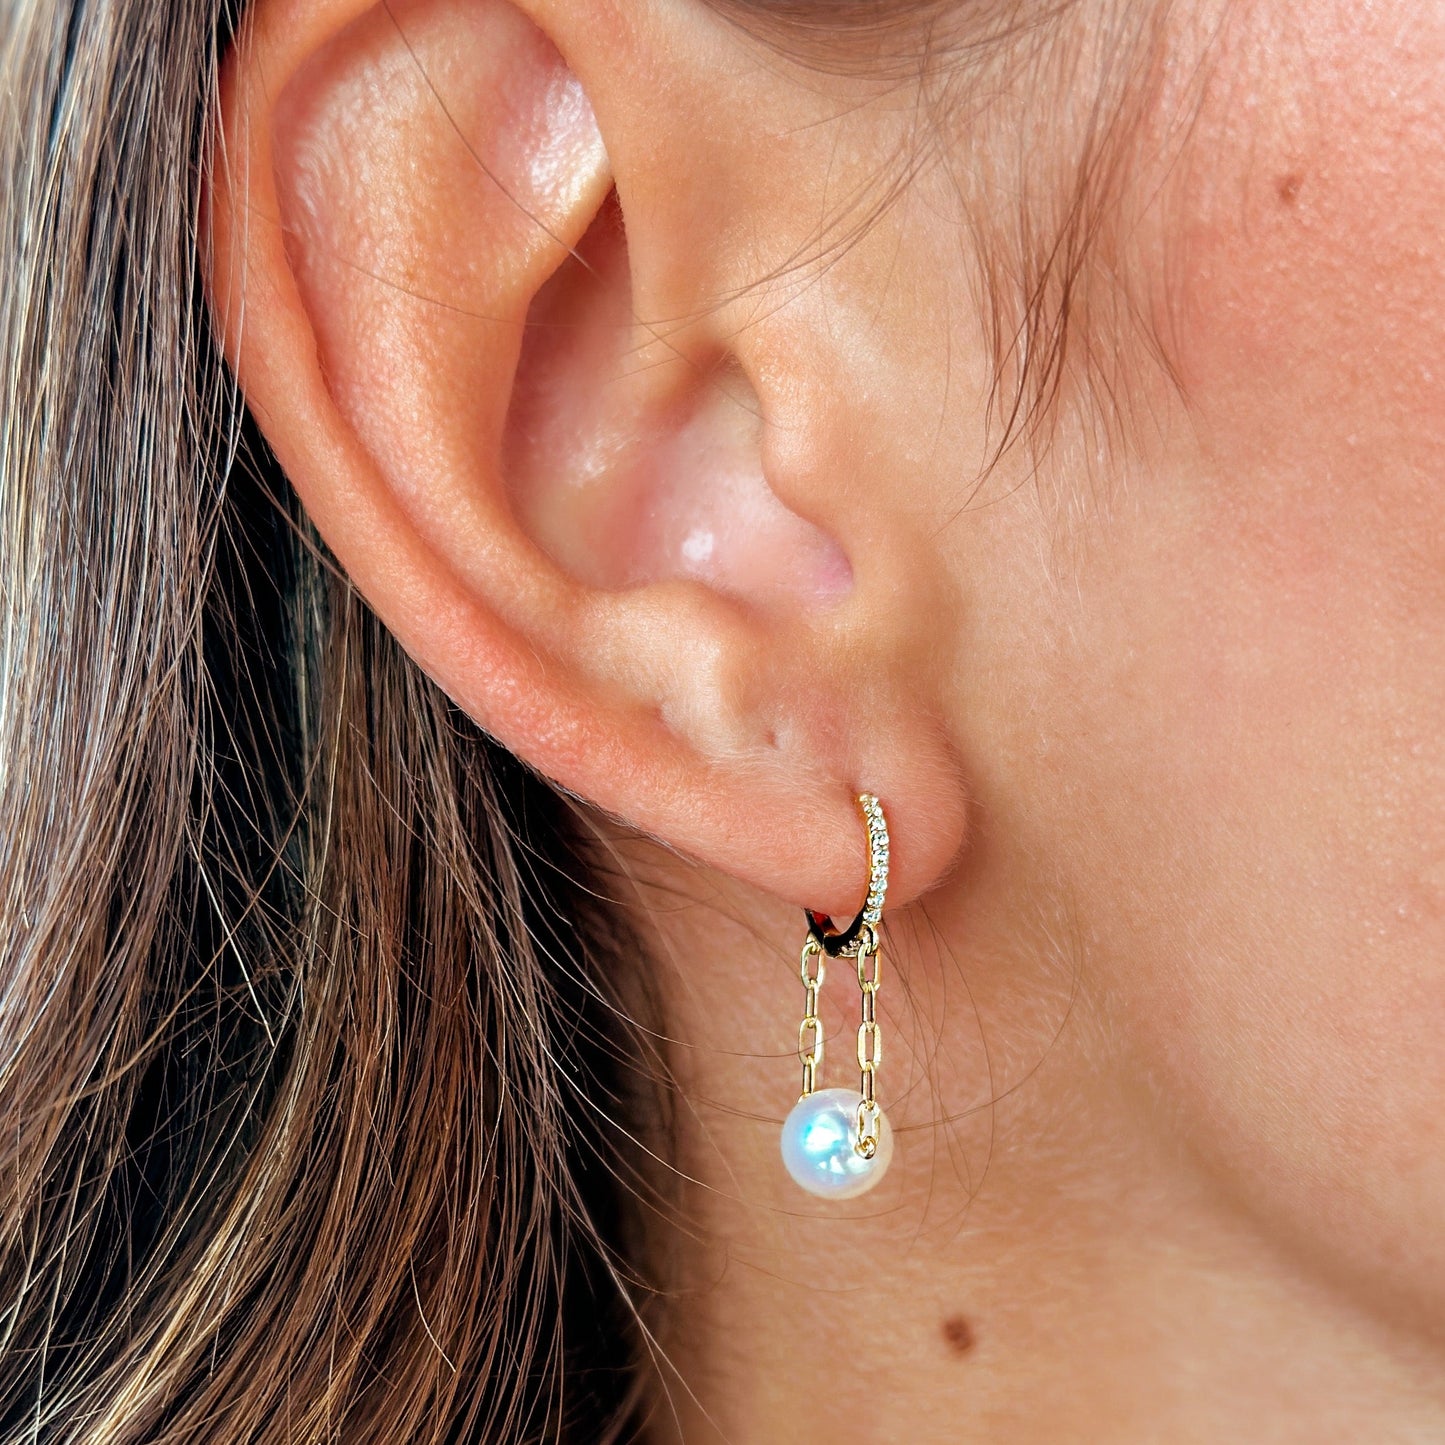 Bassali - 14K Yellow Gold Pearl and Diamond Earrings